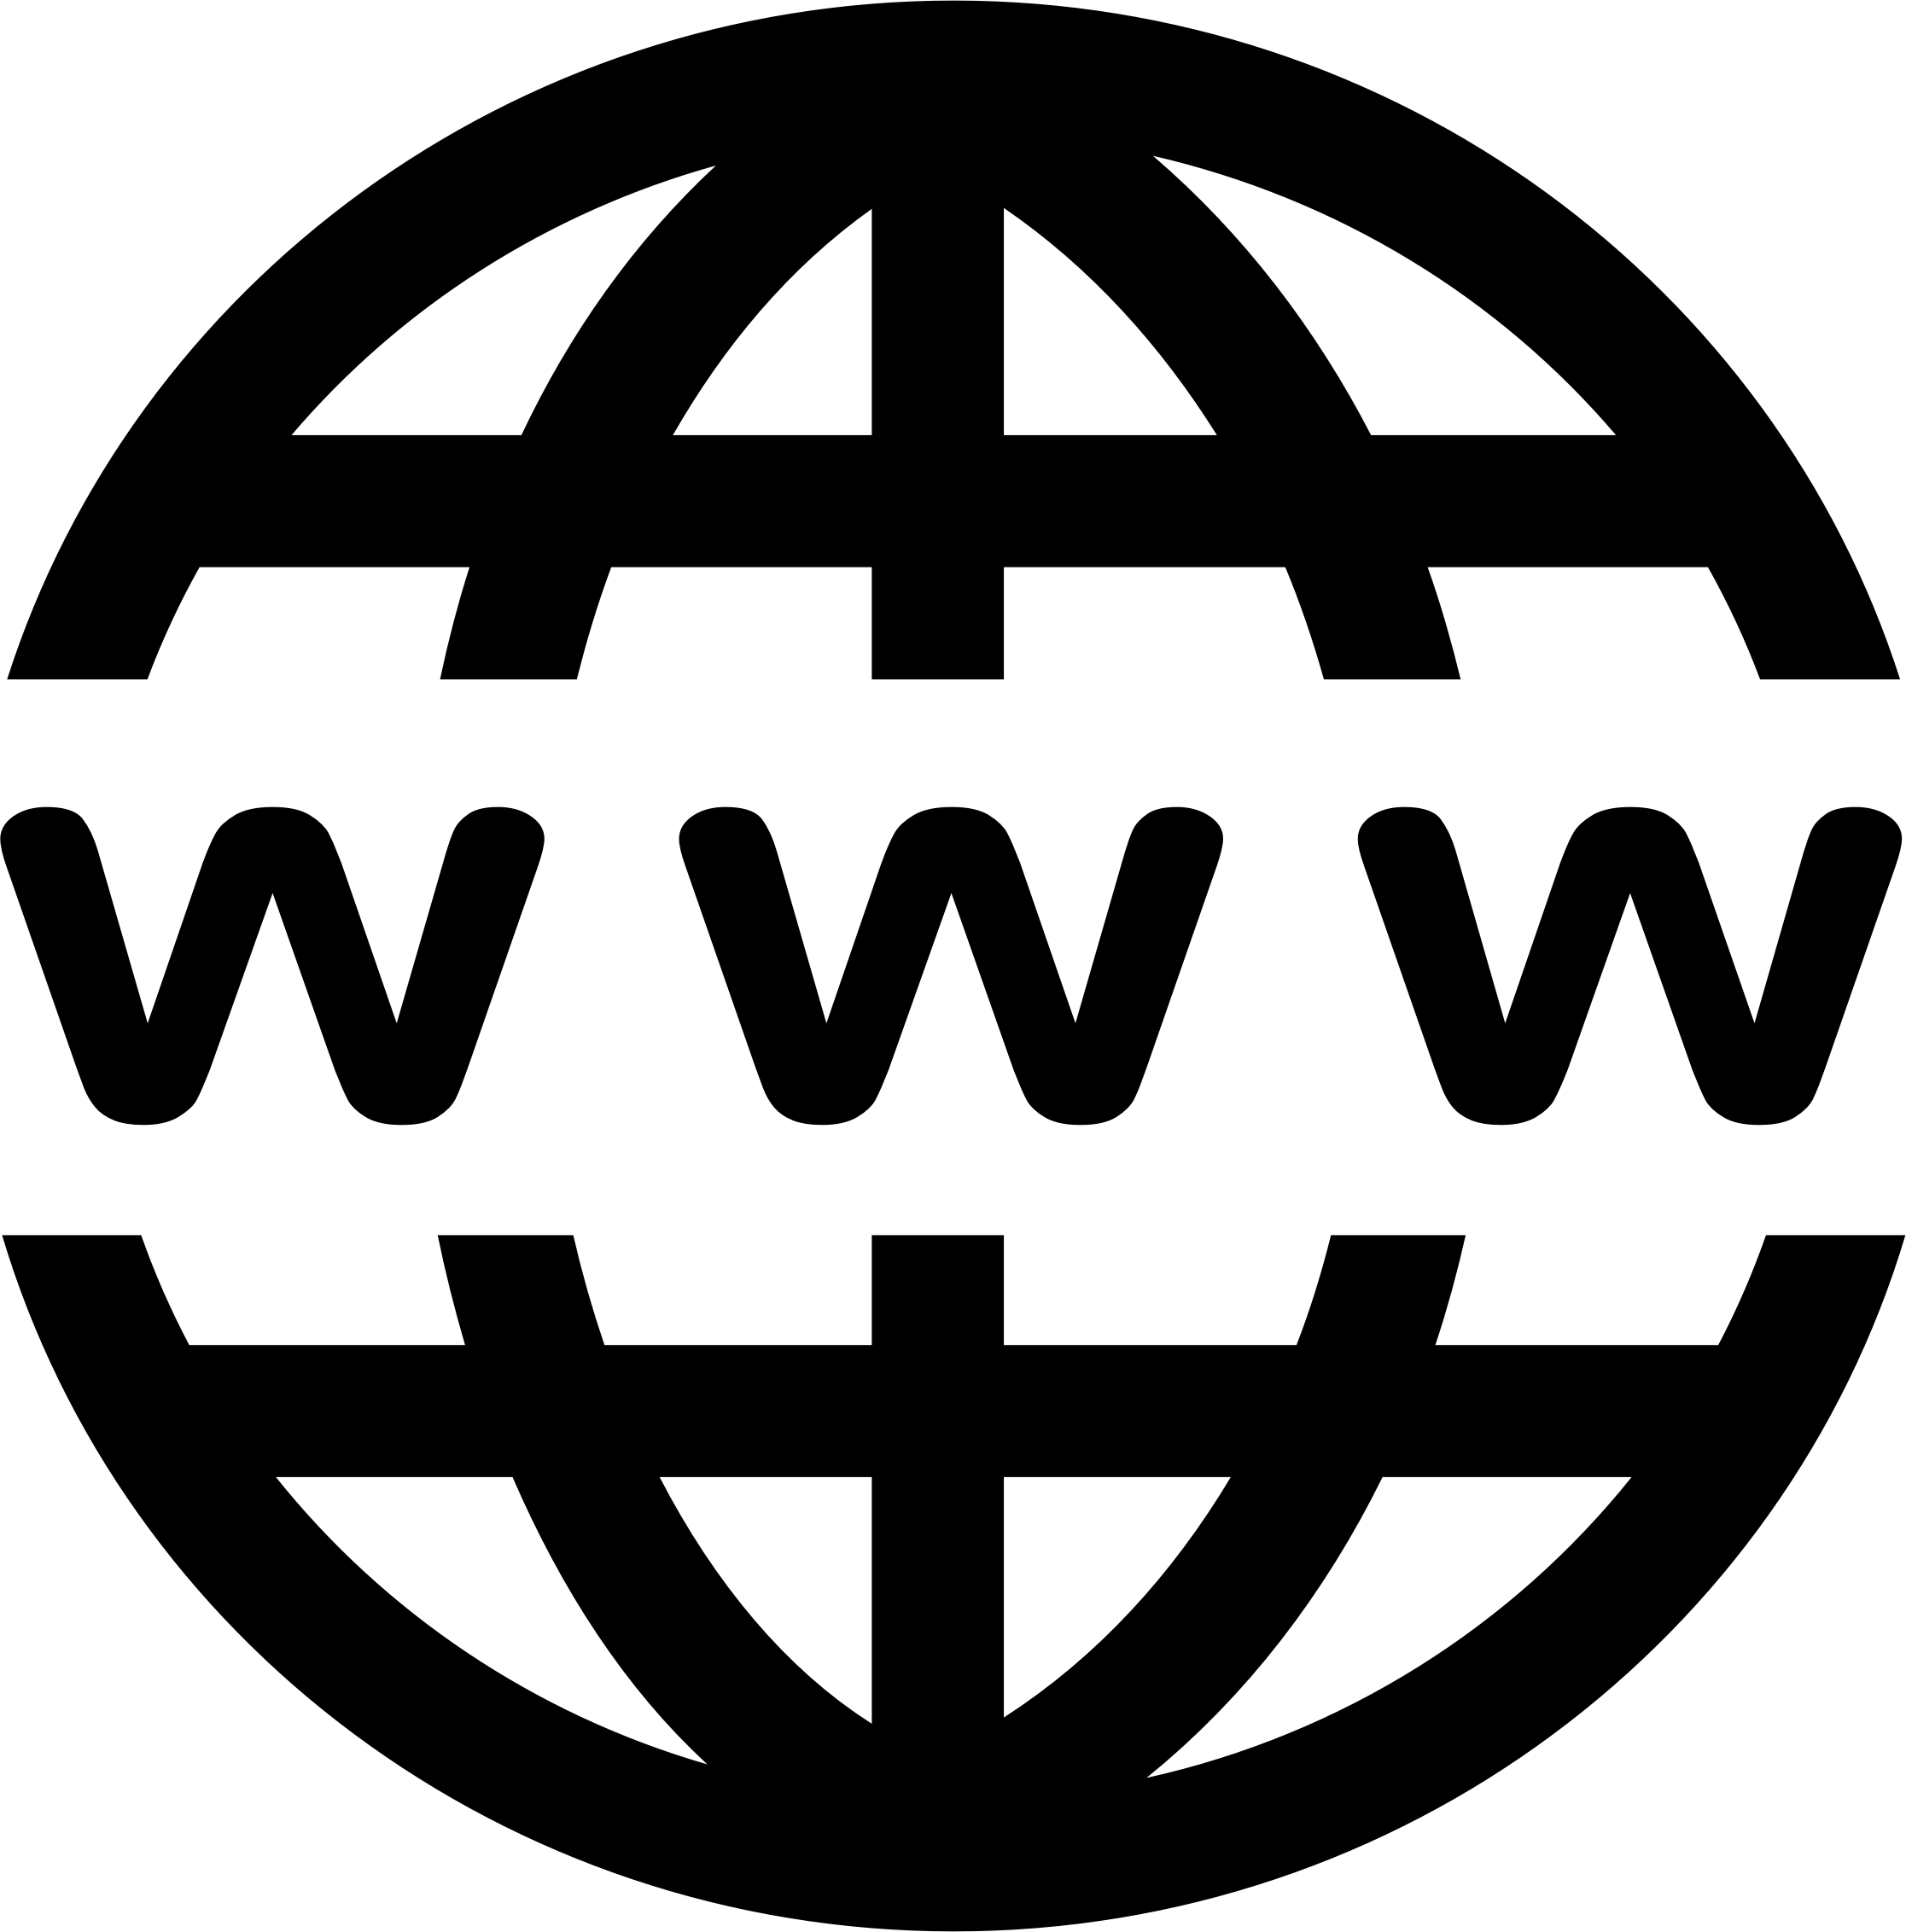 Internet World Logo - World Wide Web | The Internet | Know Your Meme